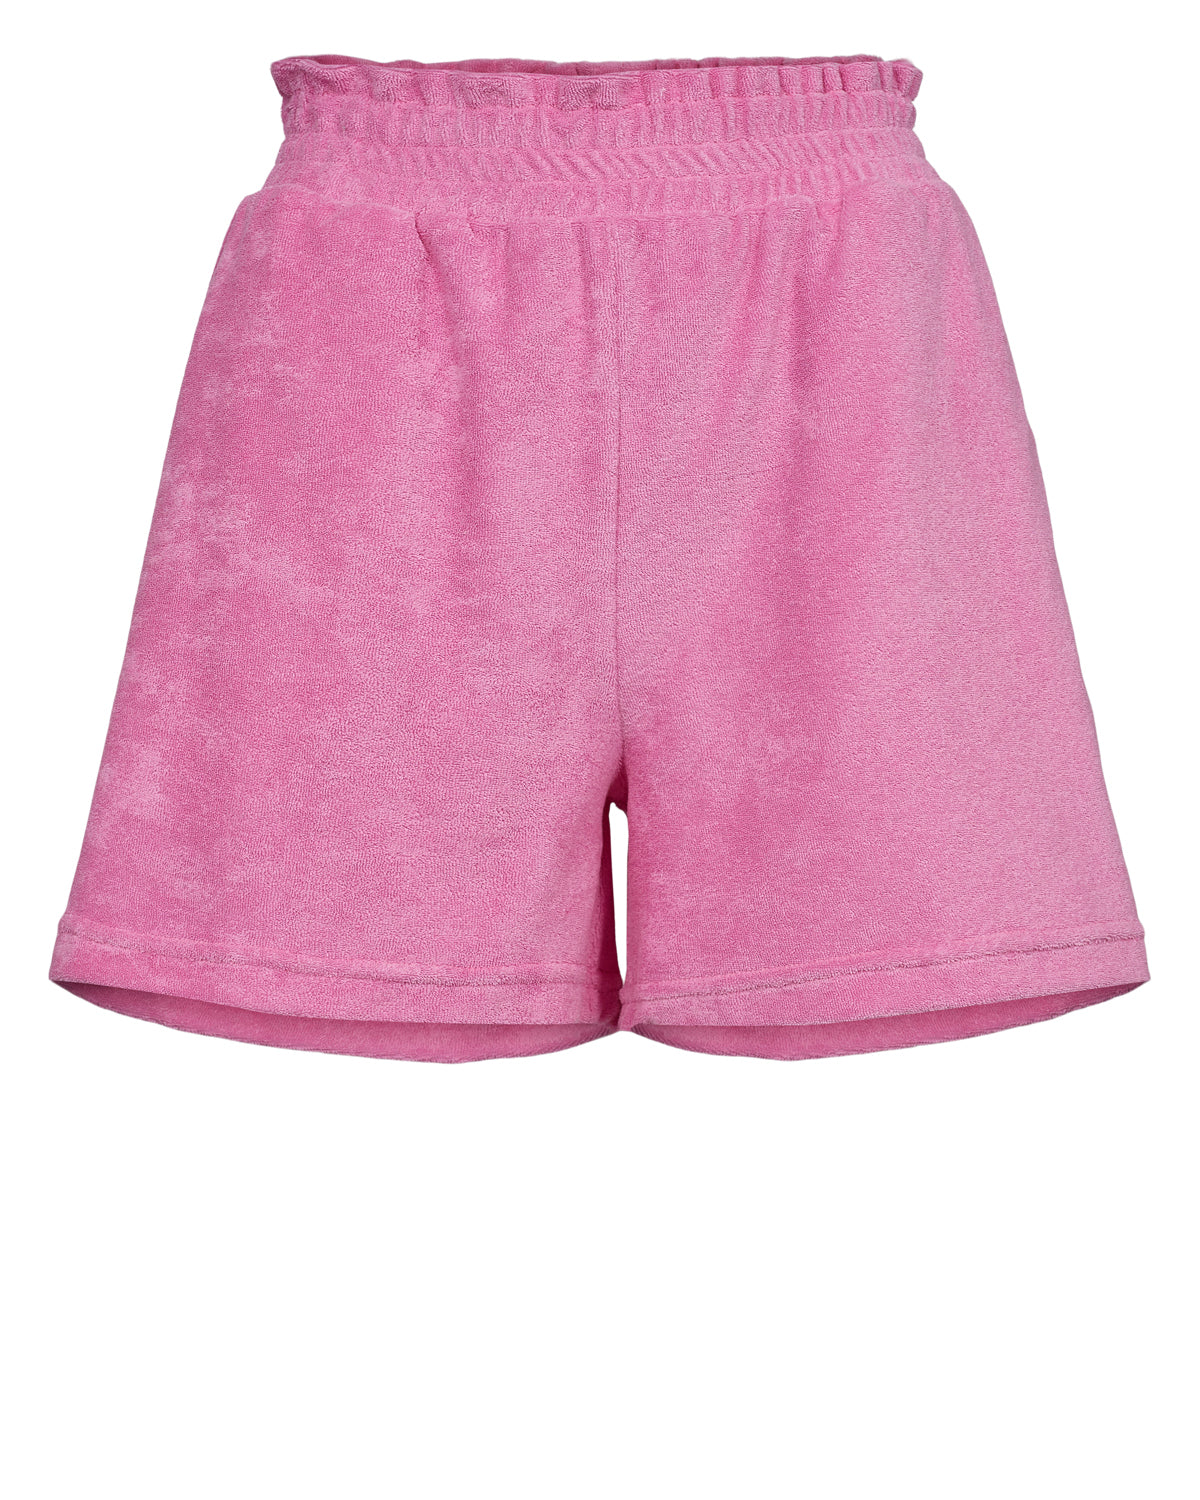 NUFROTTE Fuchsia Pink Shorts - Nümph